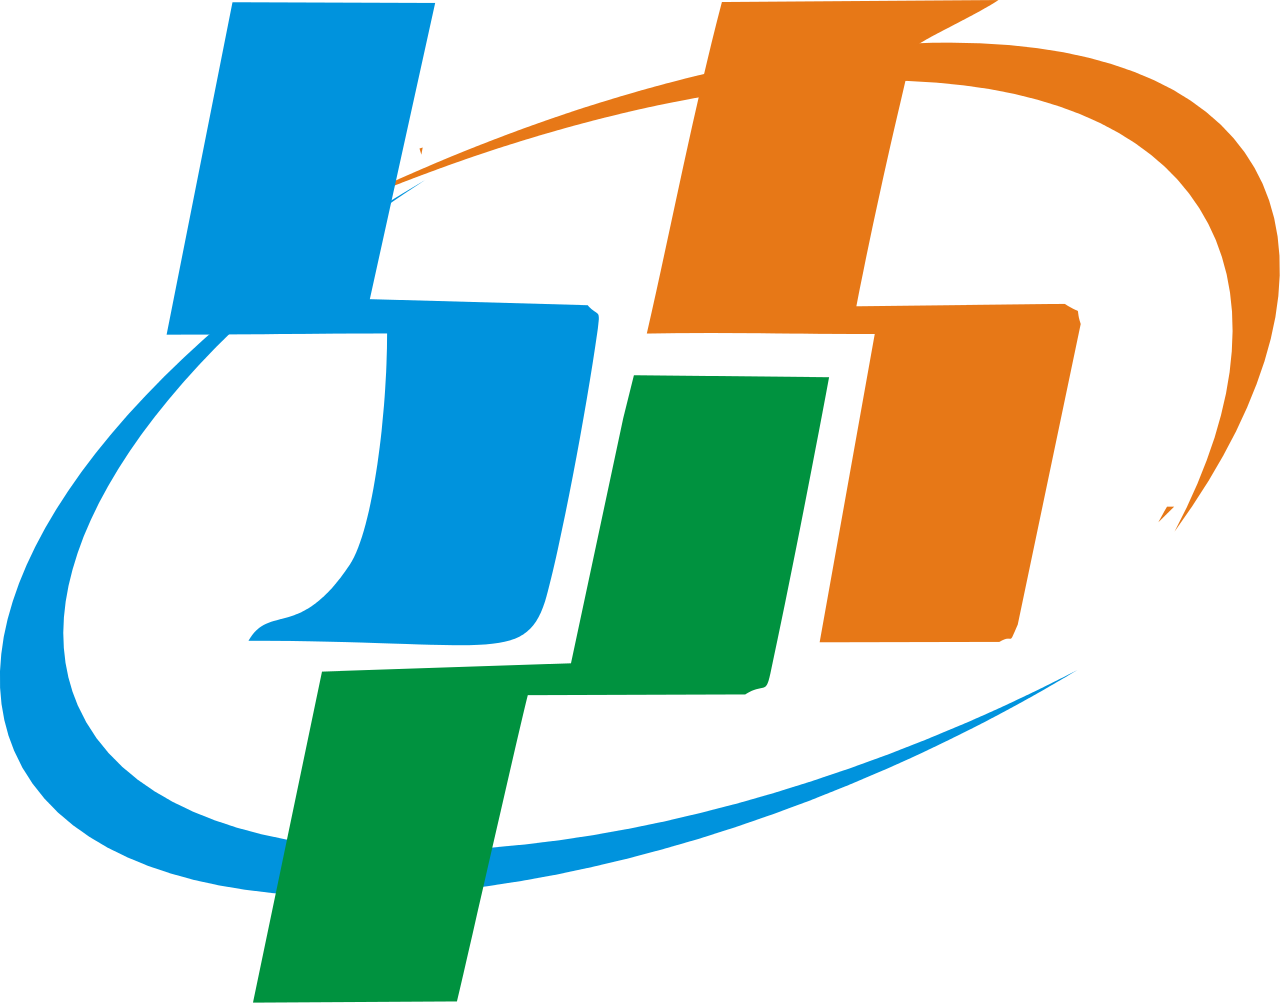 Bps Logo photo - 1